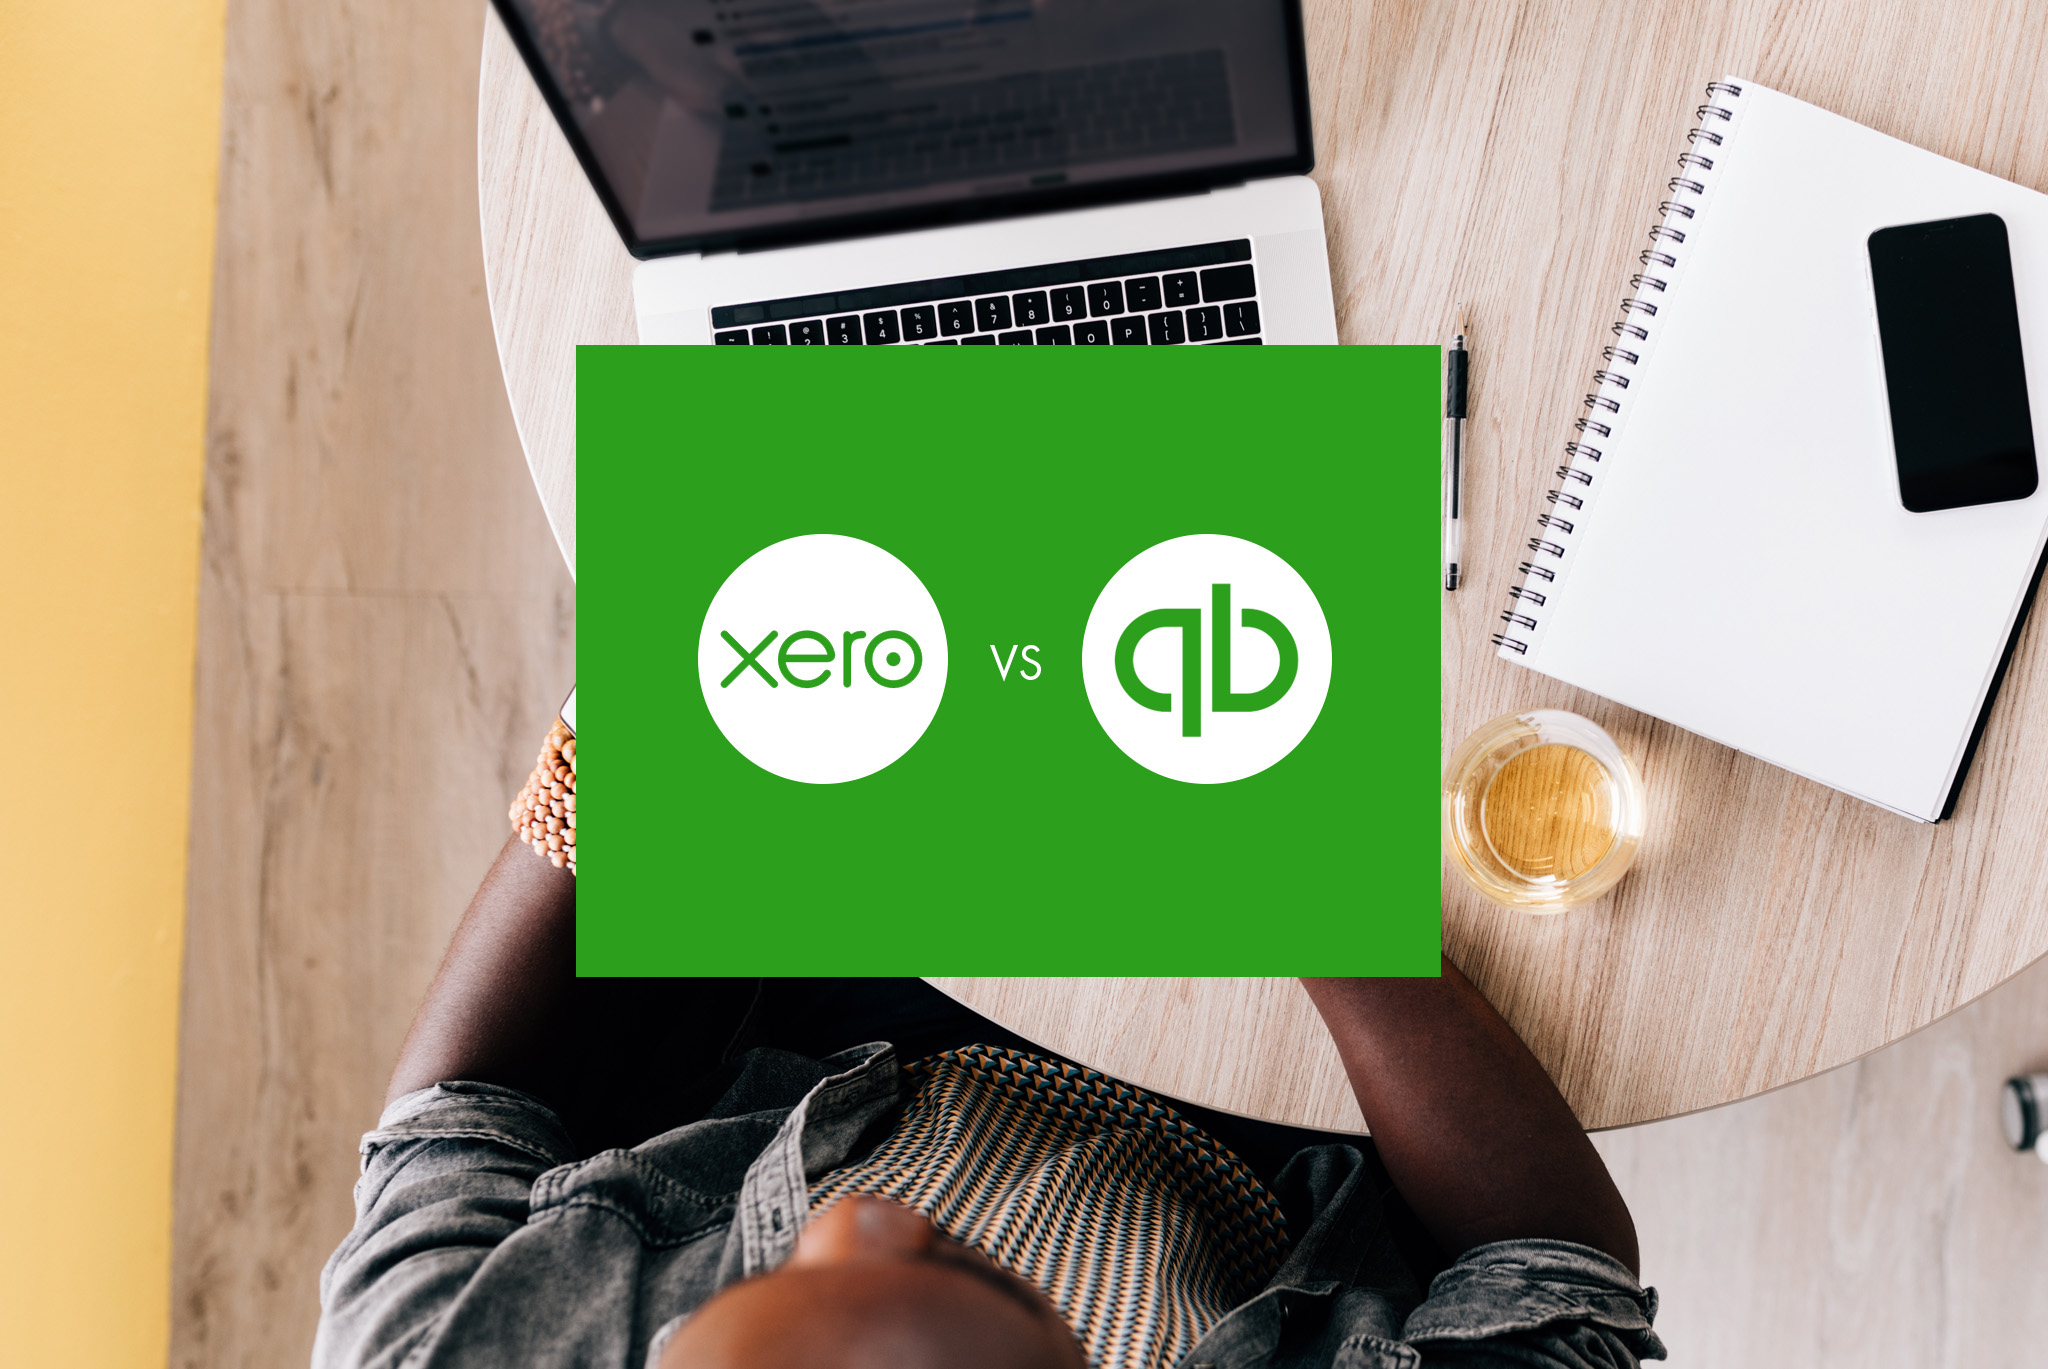 xero accounting software vs quickbooks online